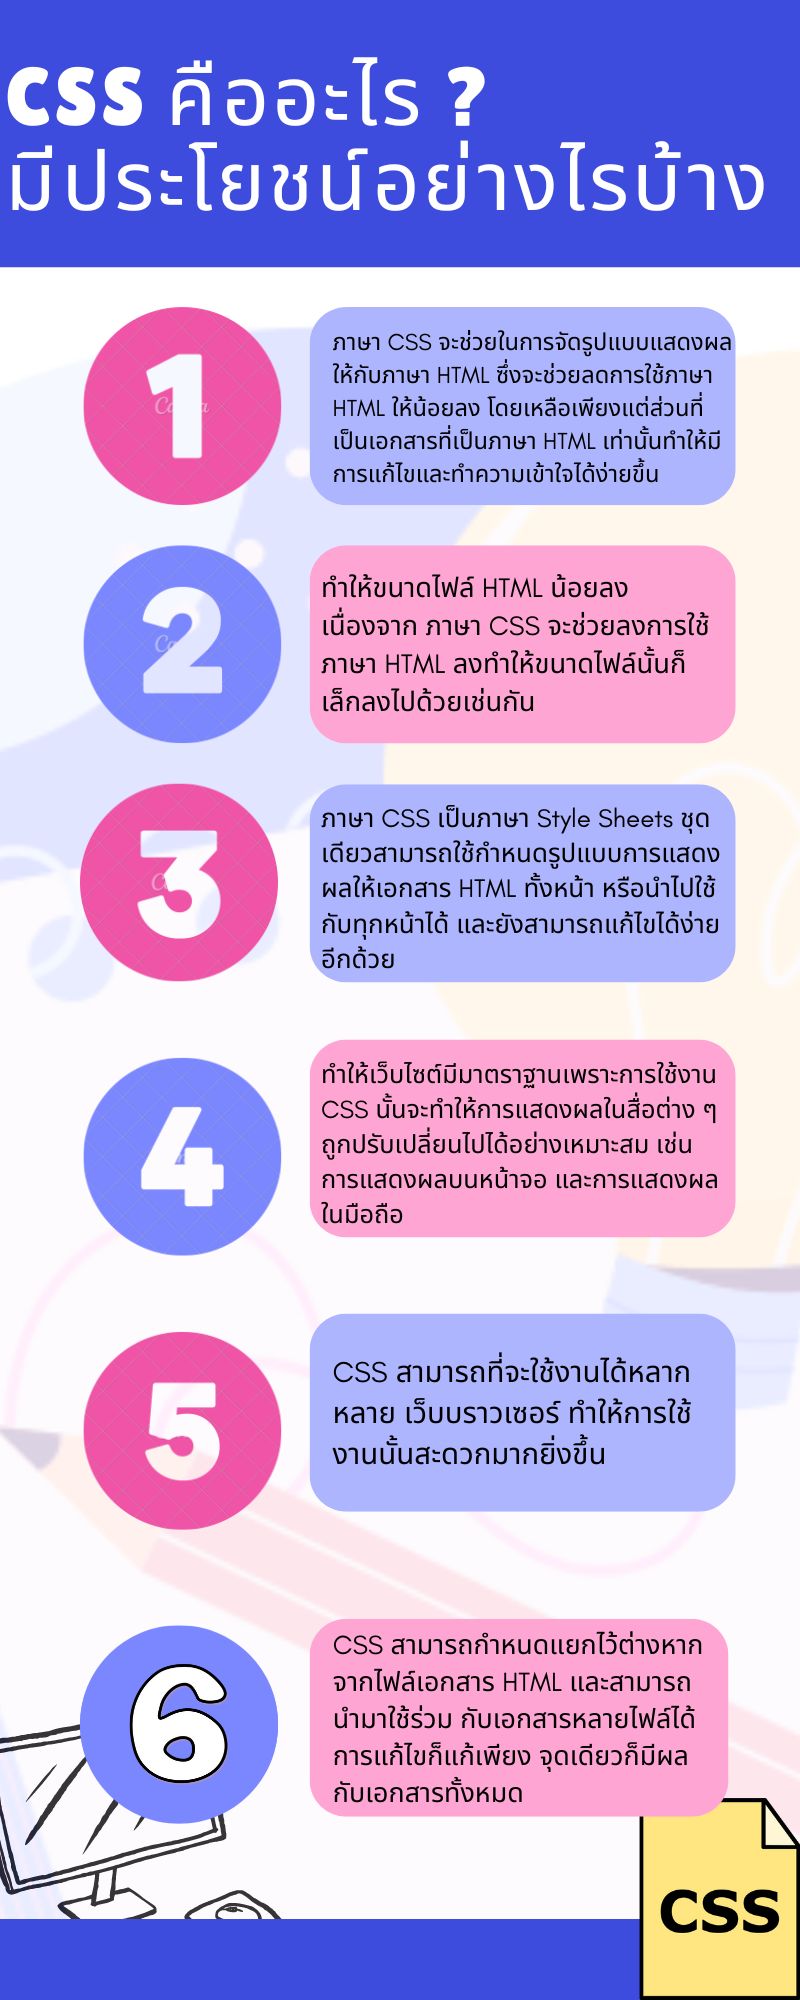 CSS คืออะไร ? มีประโยชน์อย่างไรบ้าง